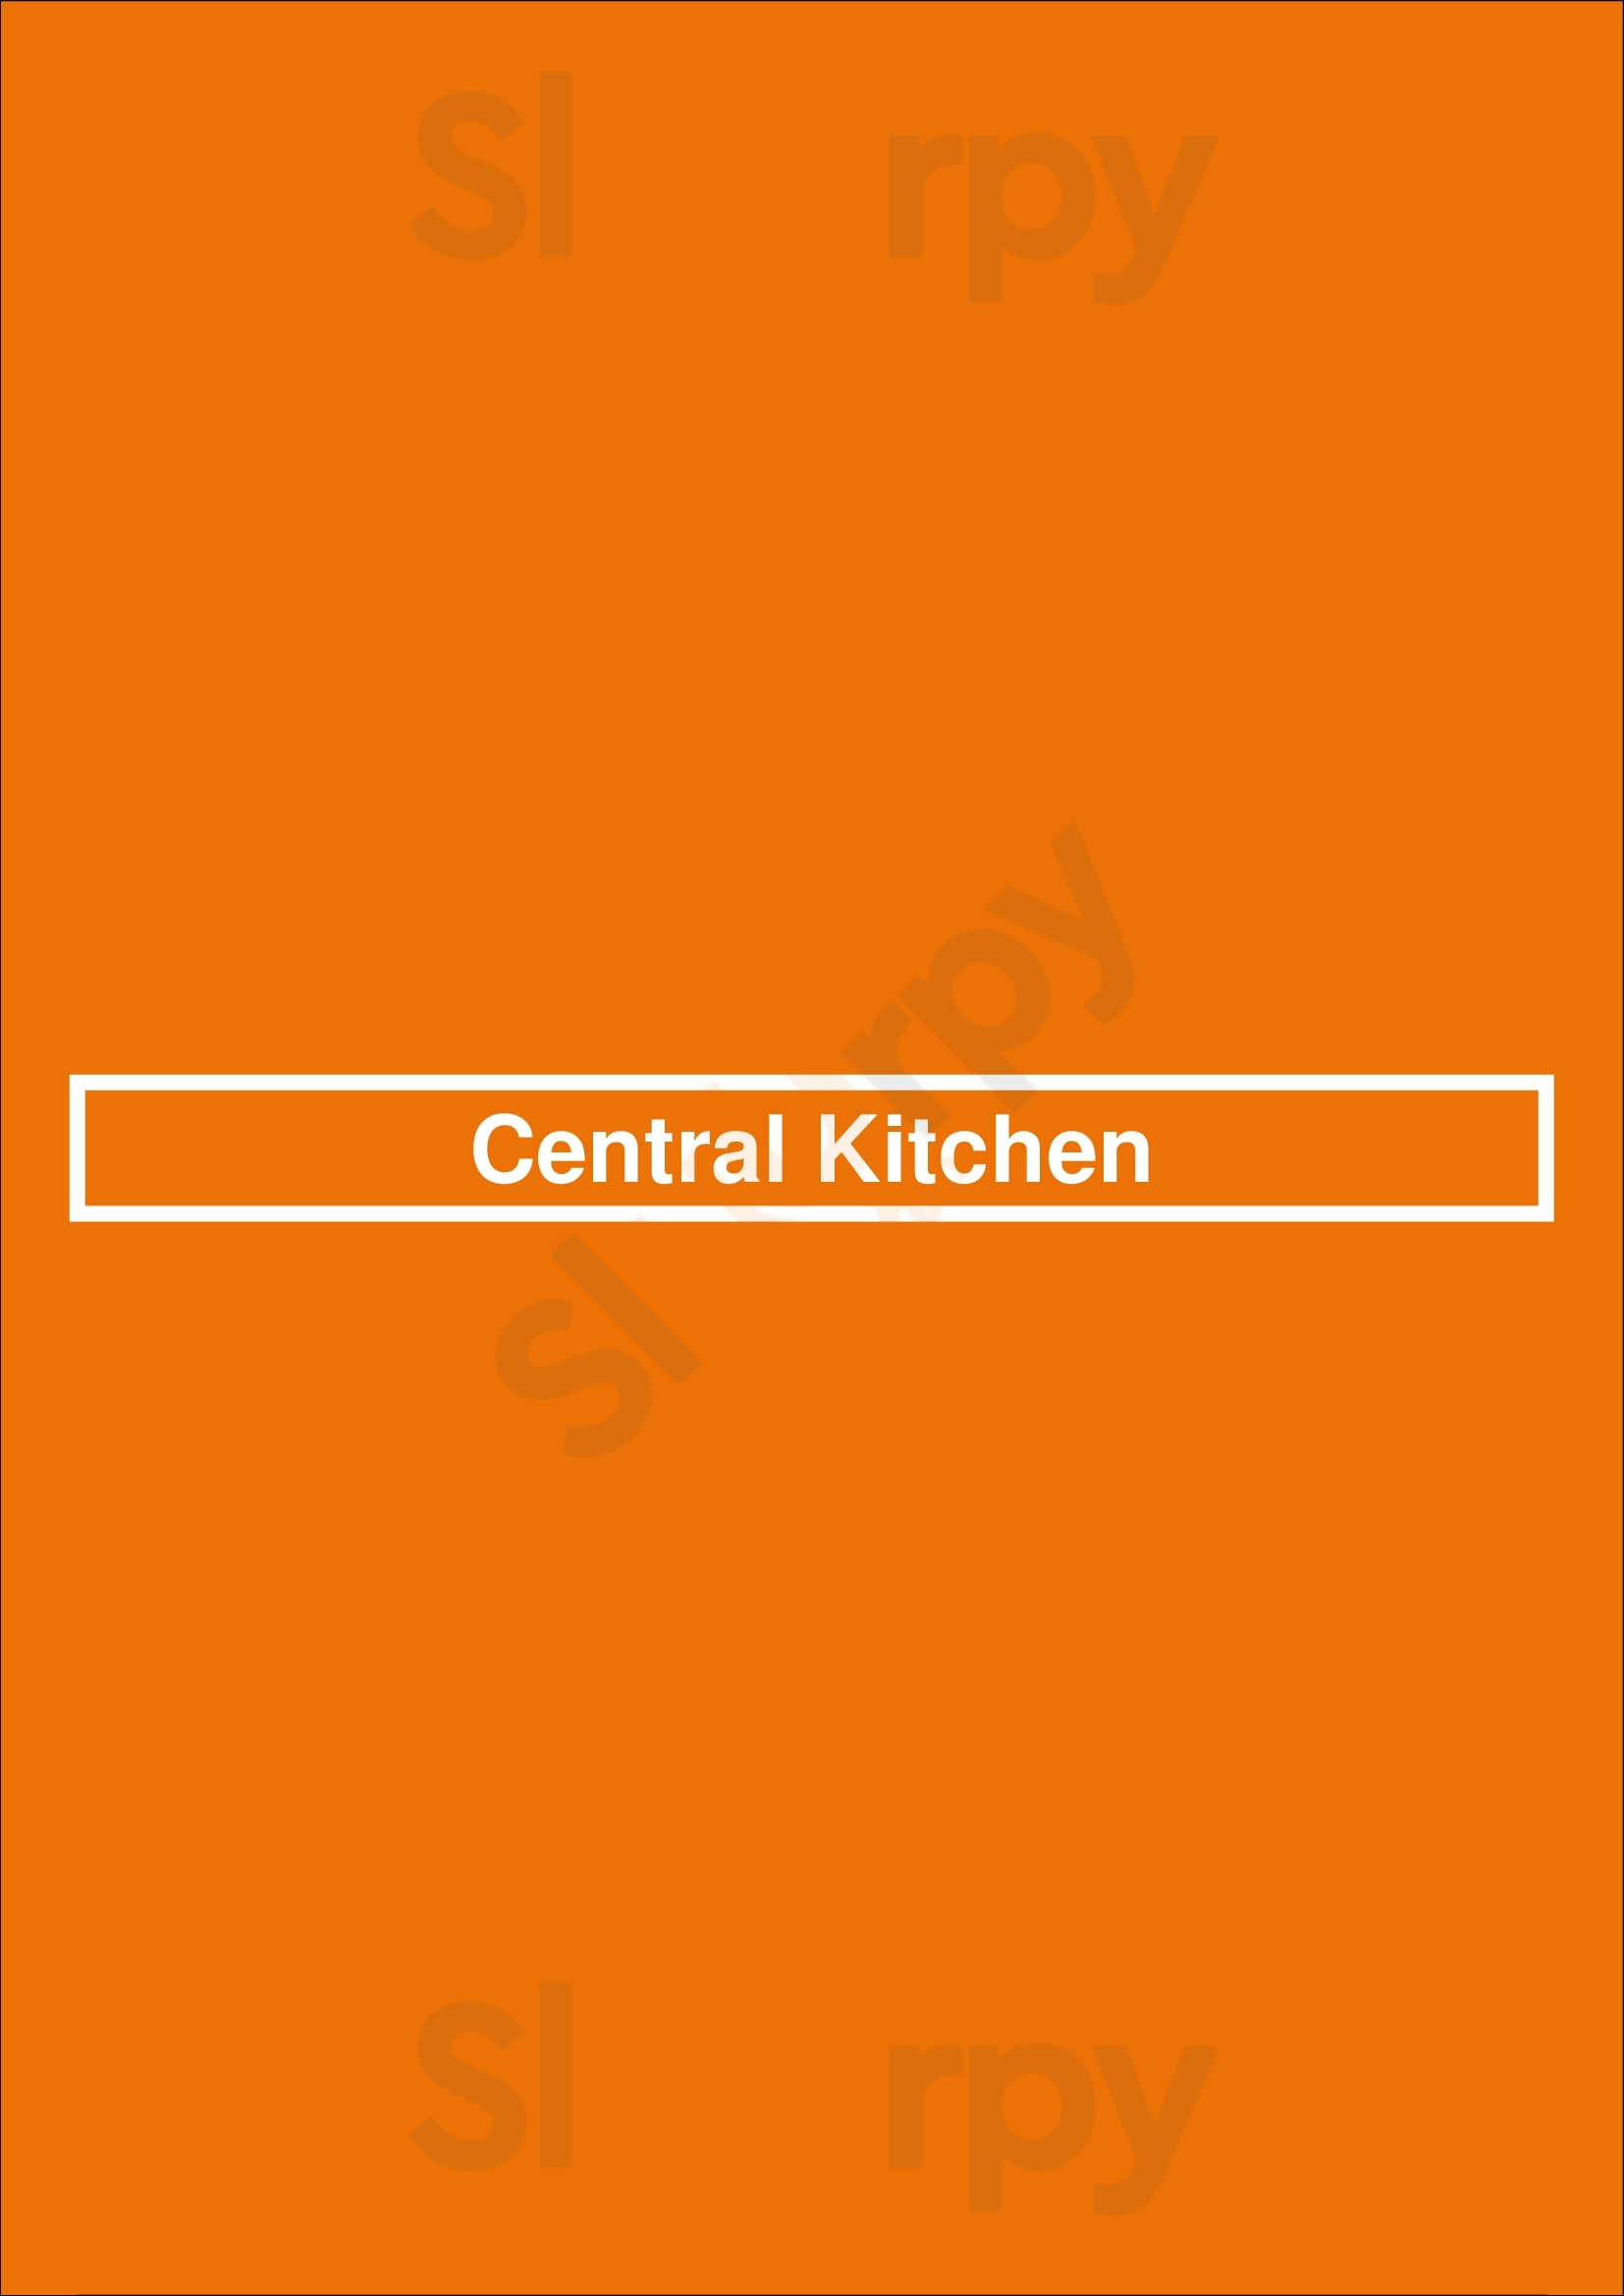 Central Kitchen At The Lorenzo Los Angeles Menu - 1